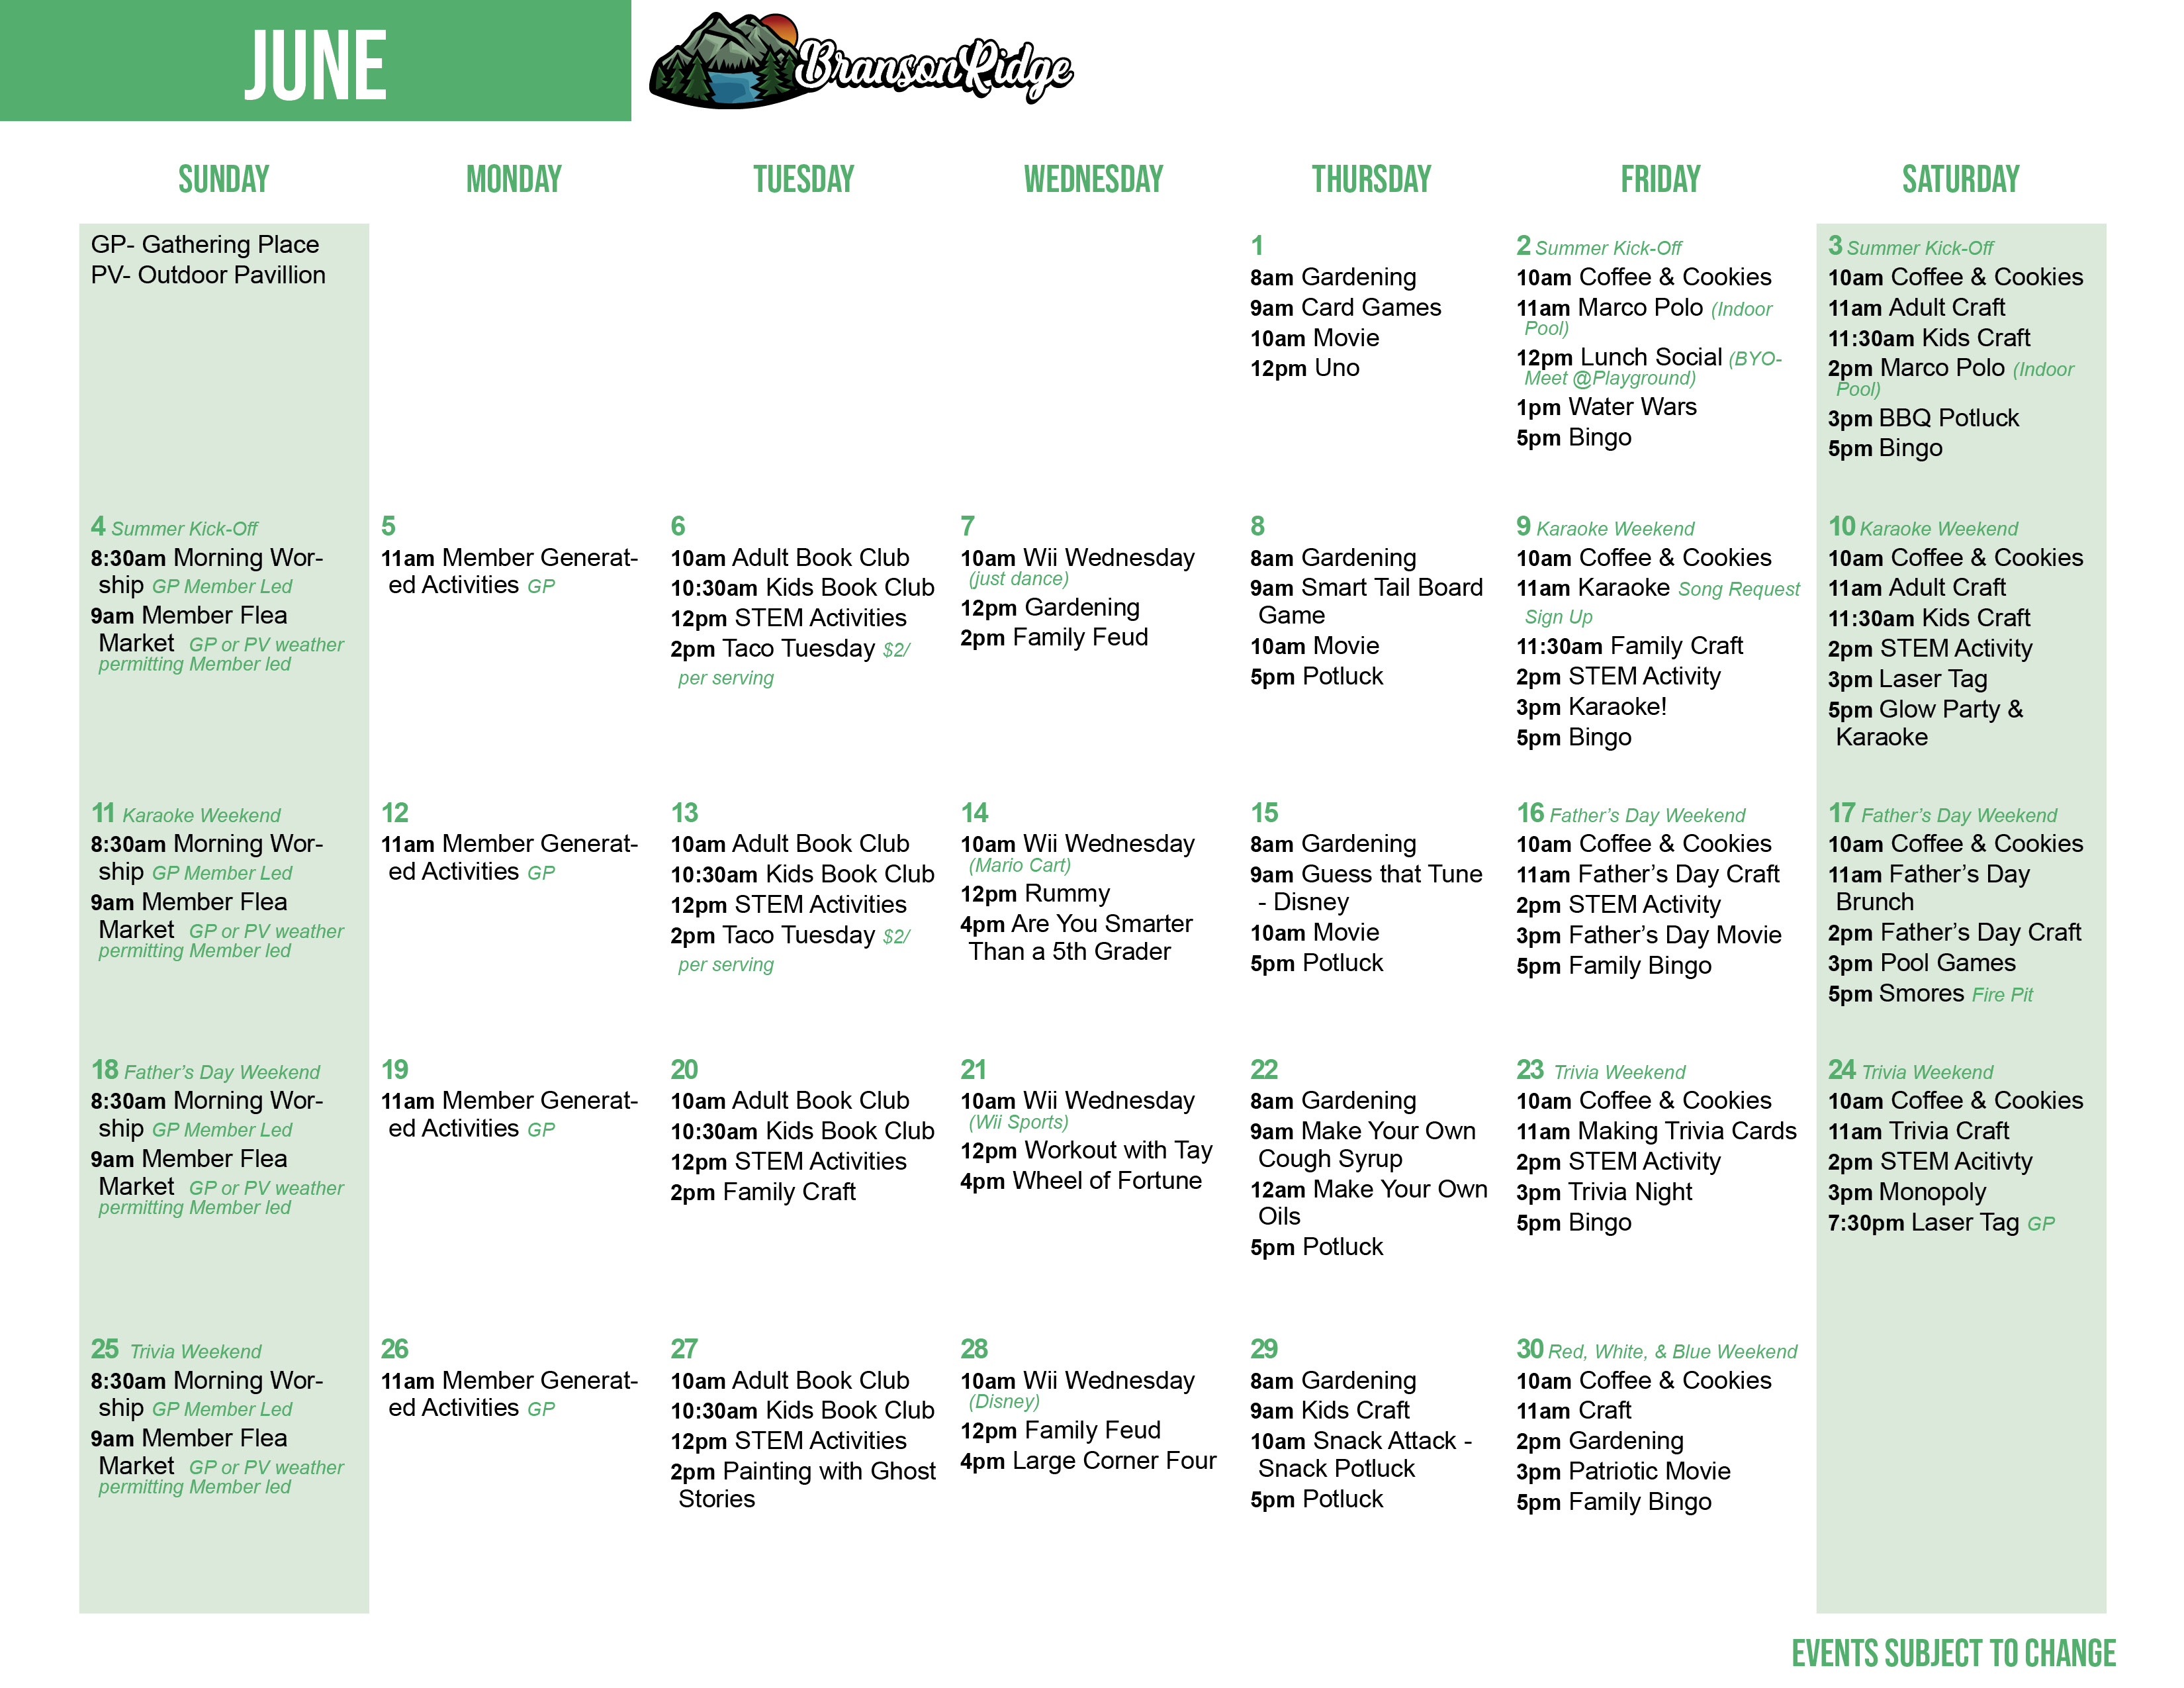 Branson's June Activity Calendar